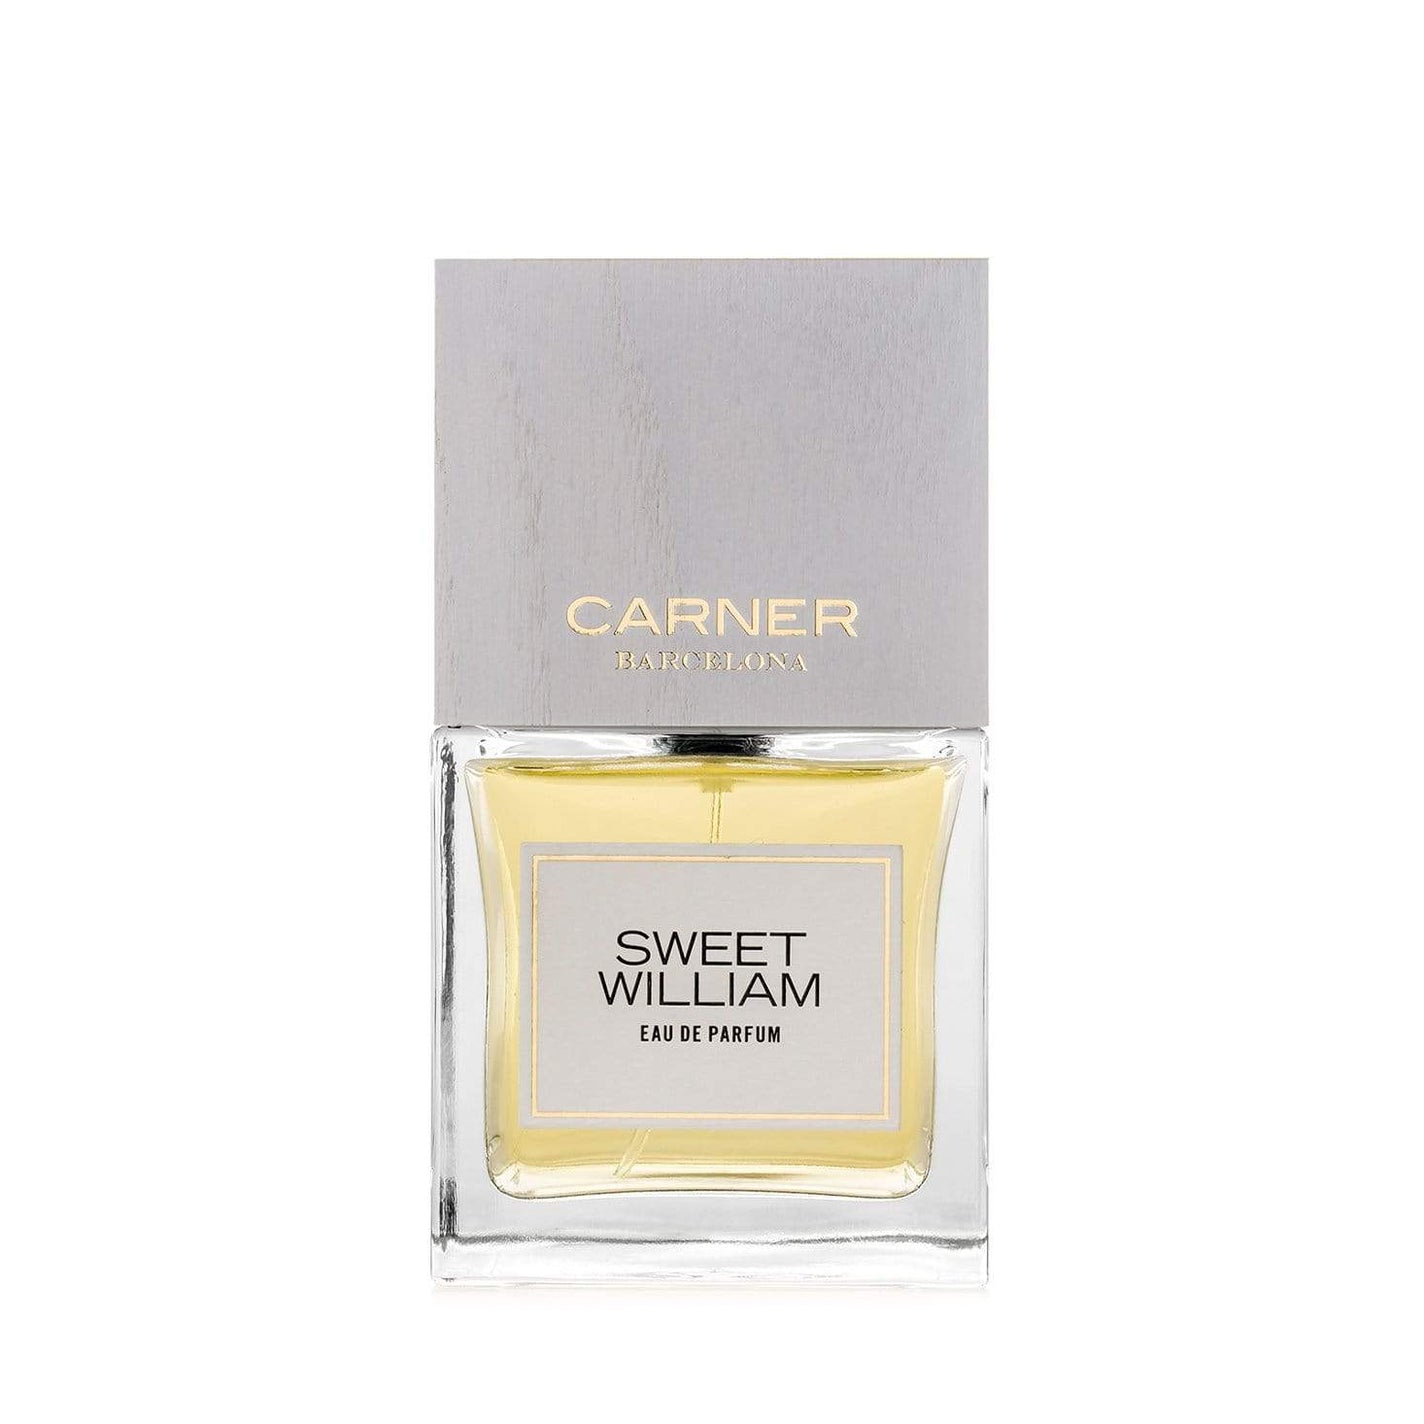 CARNER BARCELONA Sweet William Eau de Parfum - 50ml